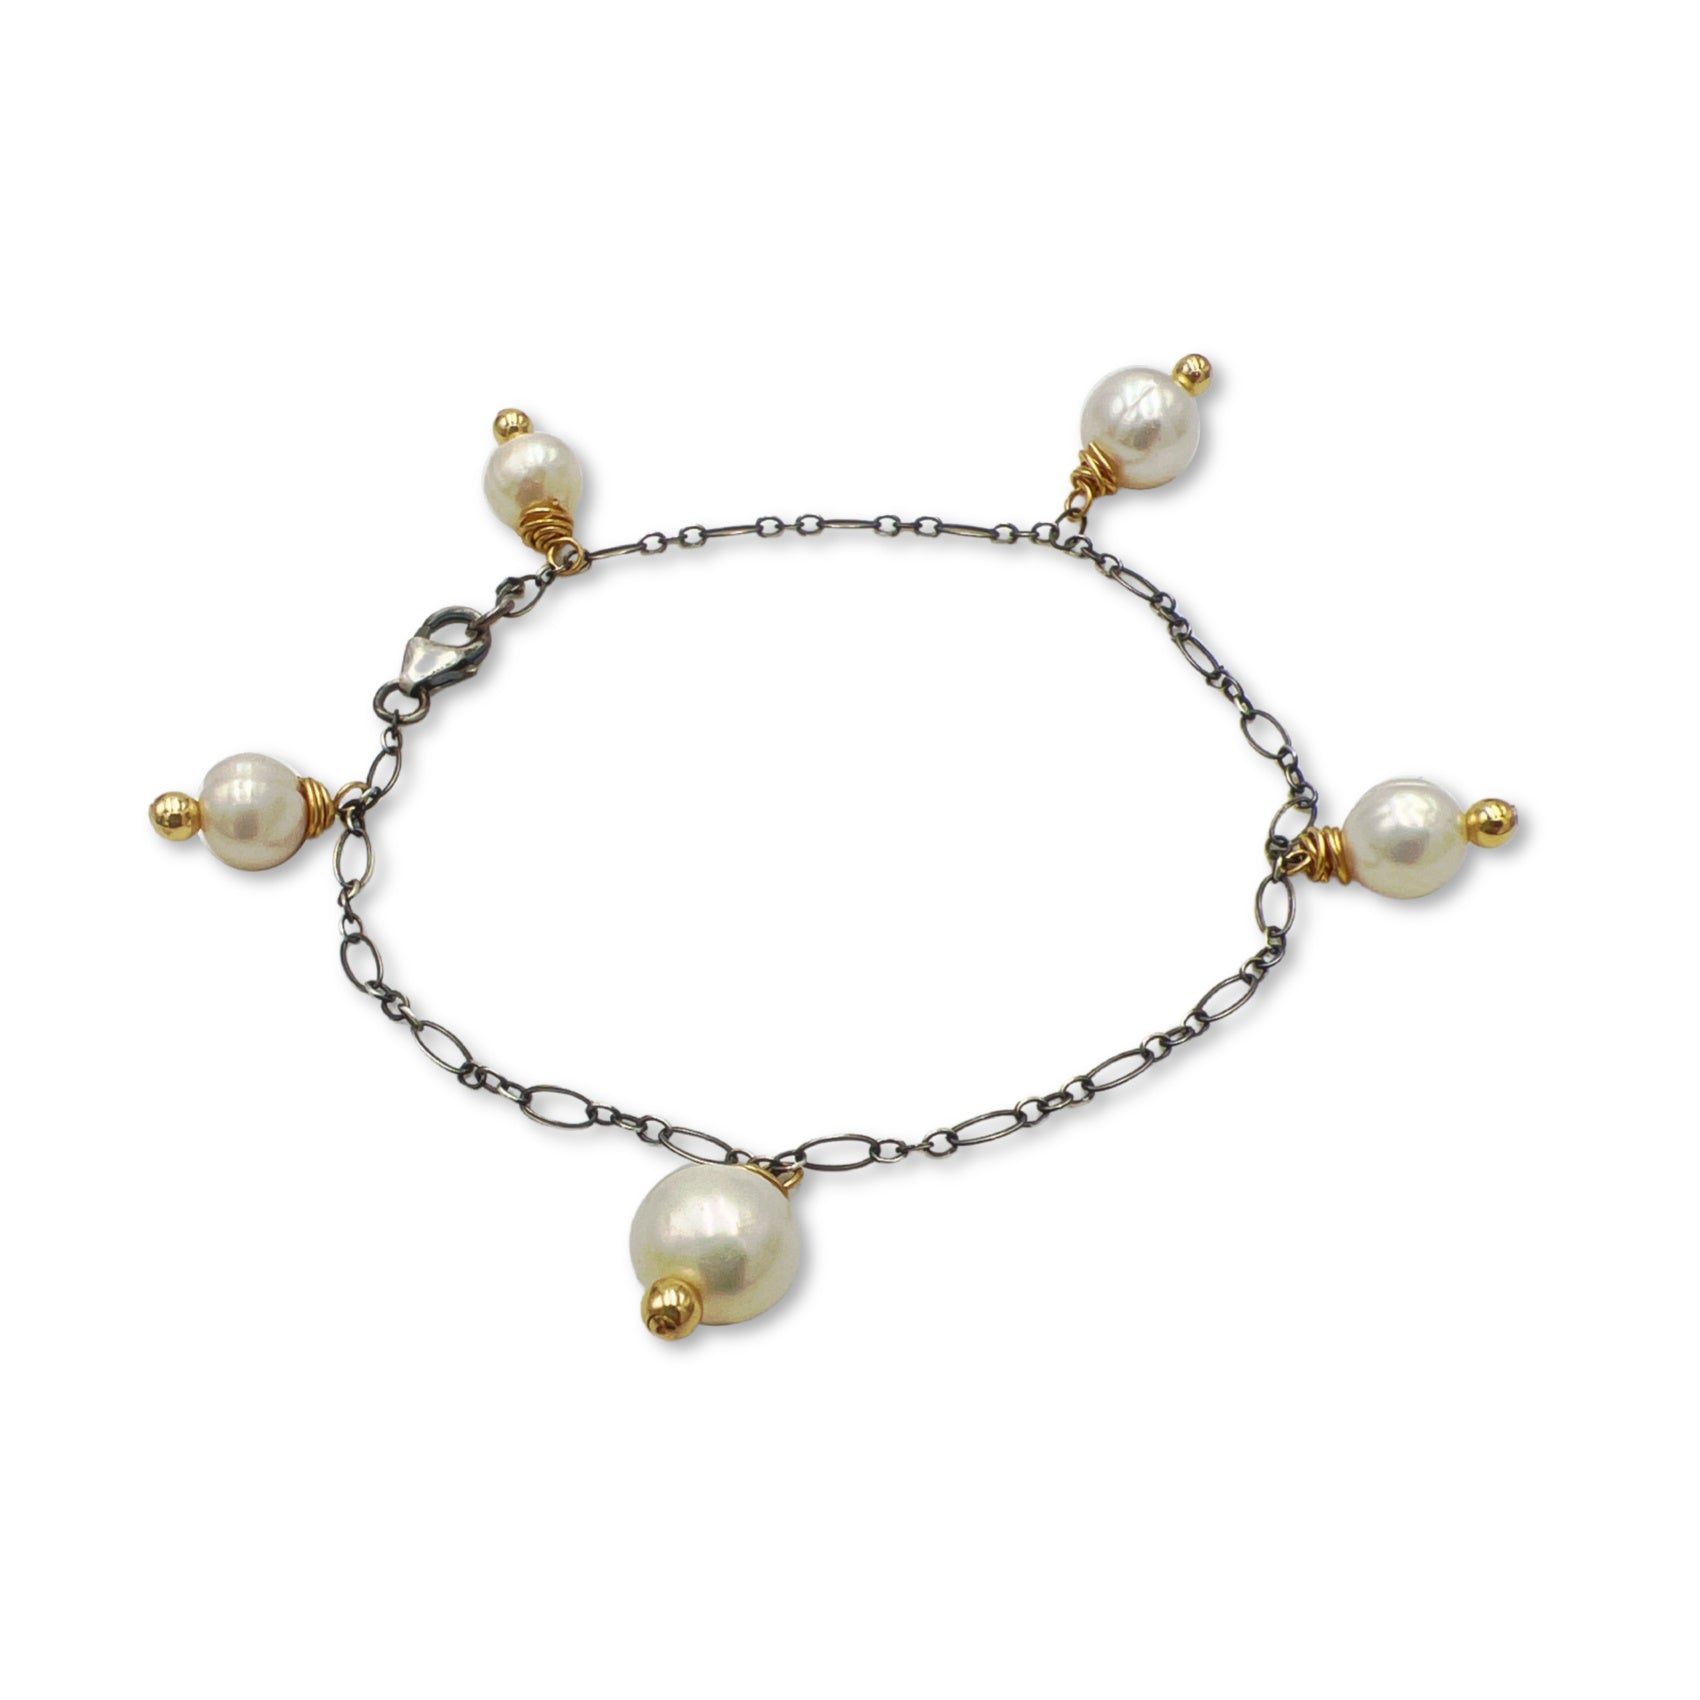 Cute Pearl Bracelet Gold Plated Silver Handmade Jewelry Accessories Women